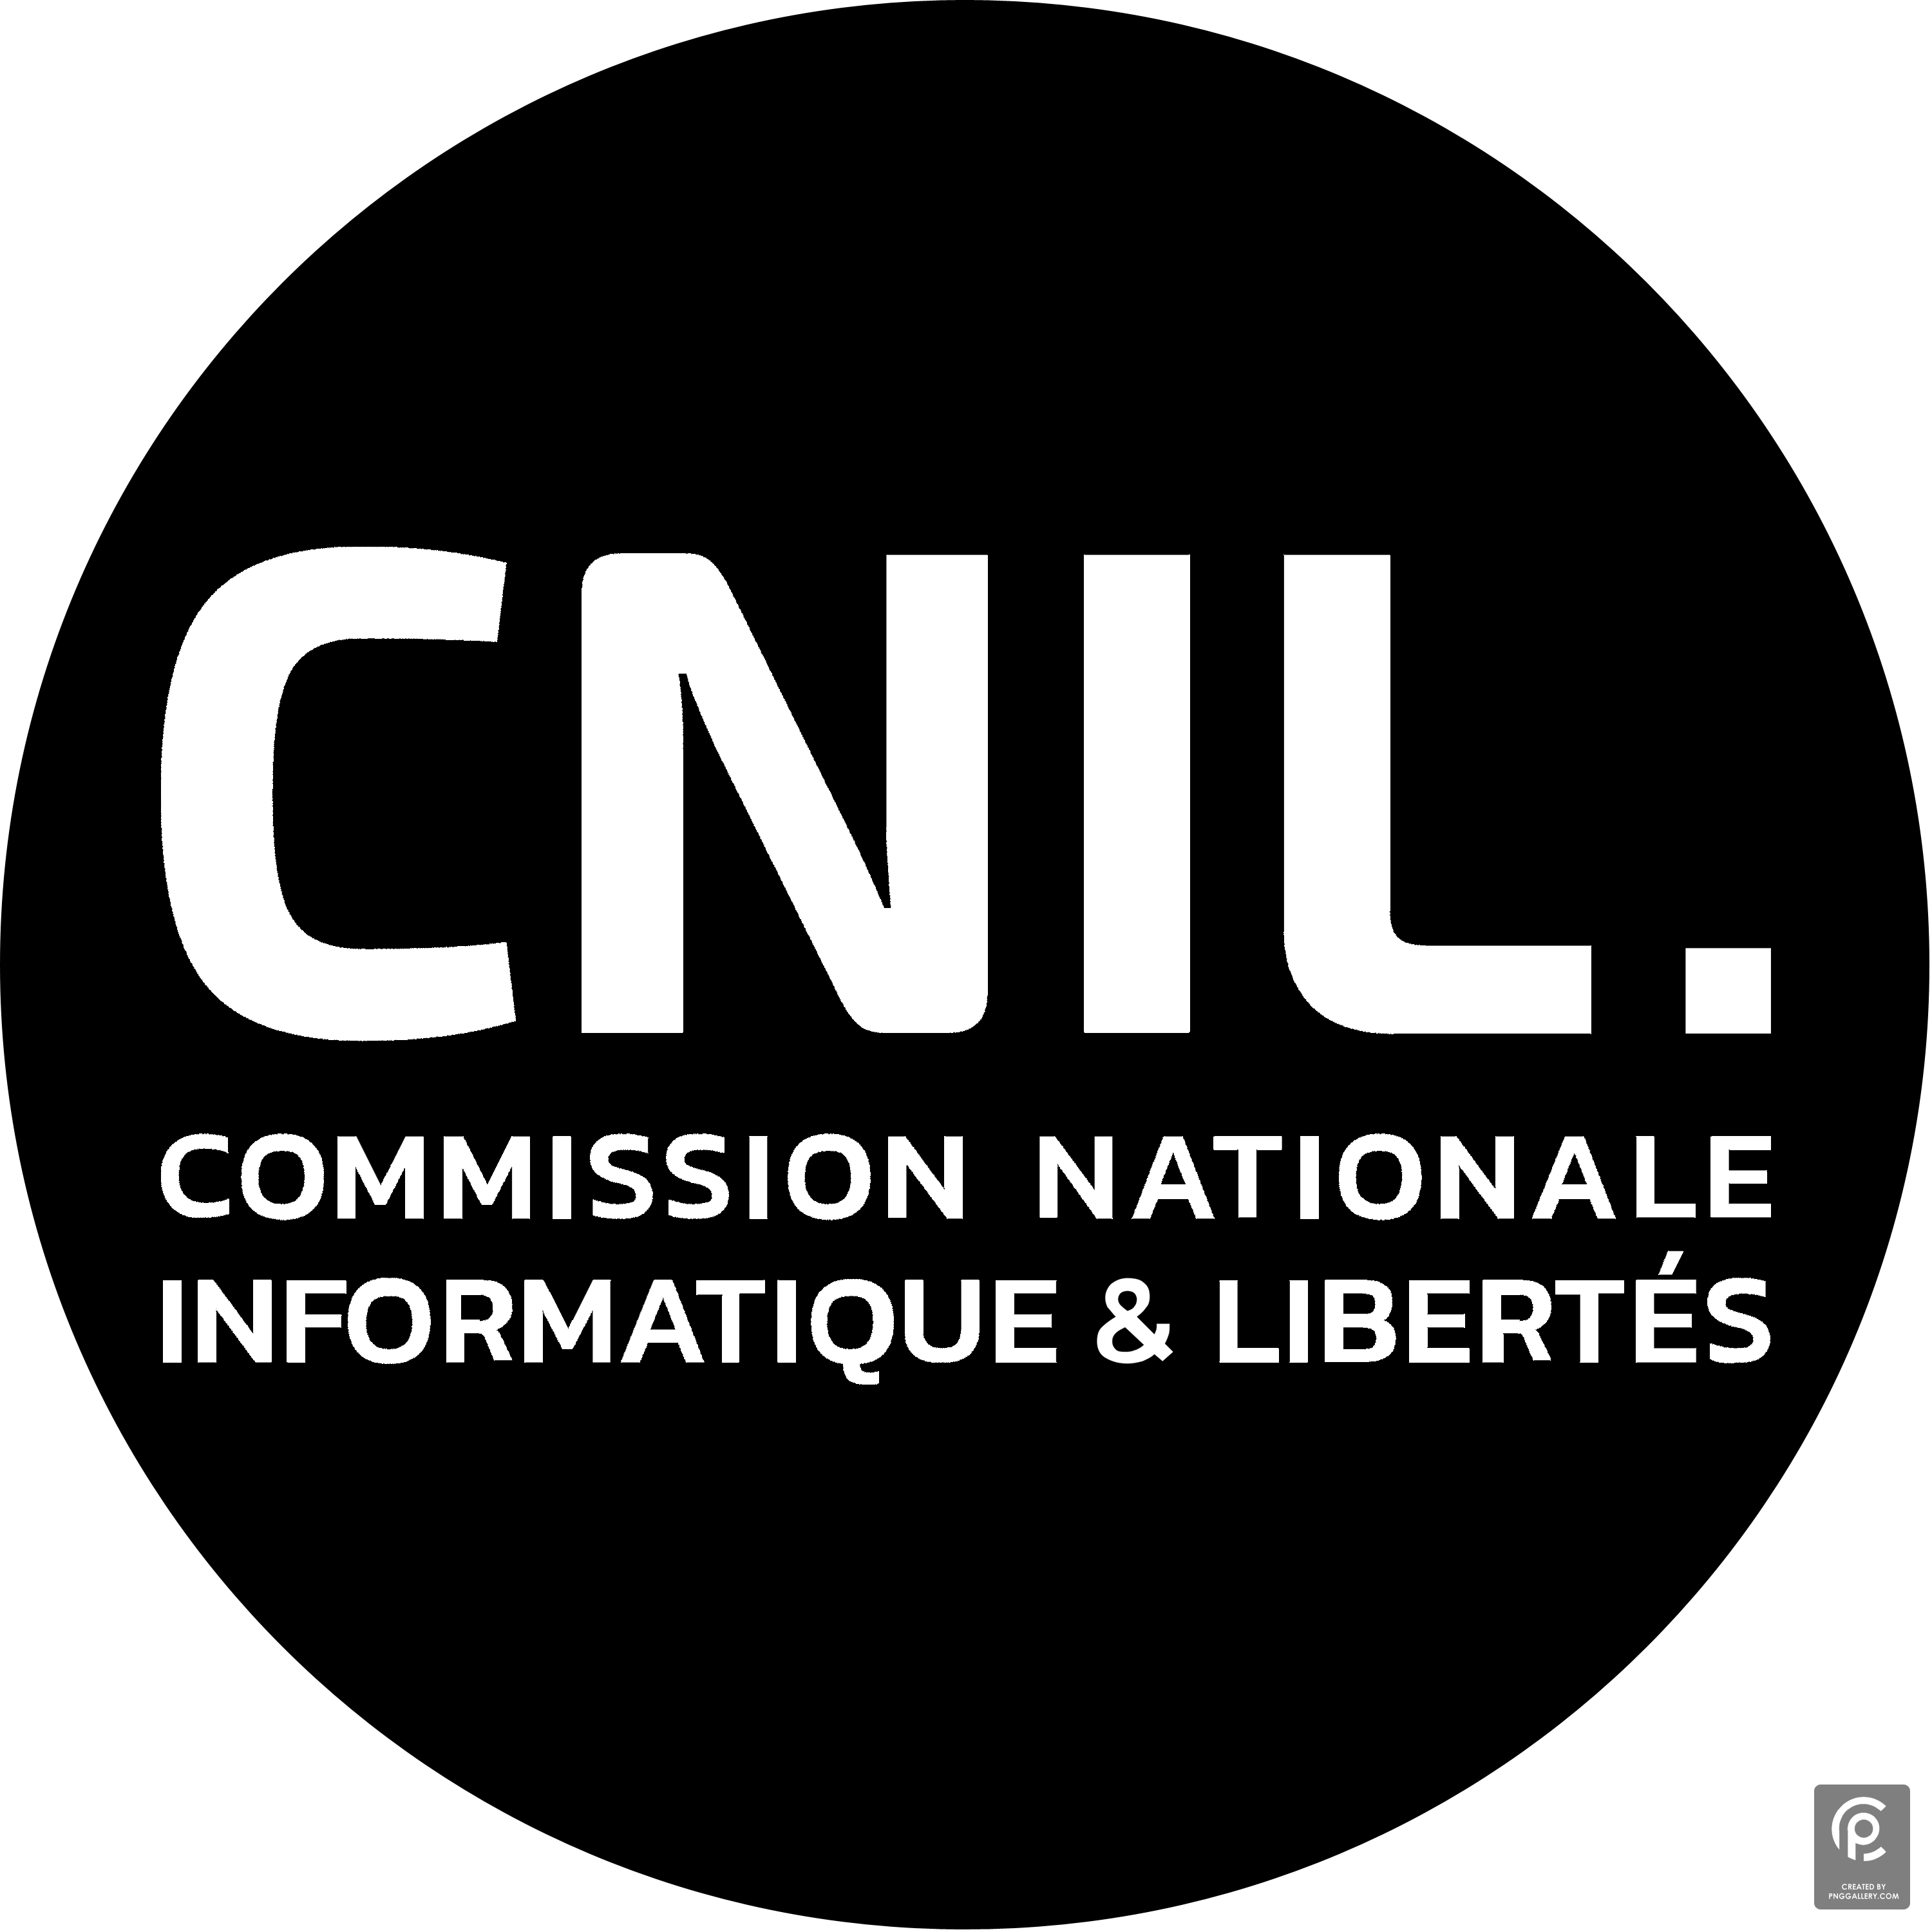 Cnil Logo 2016 Transparent Gallery